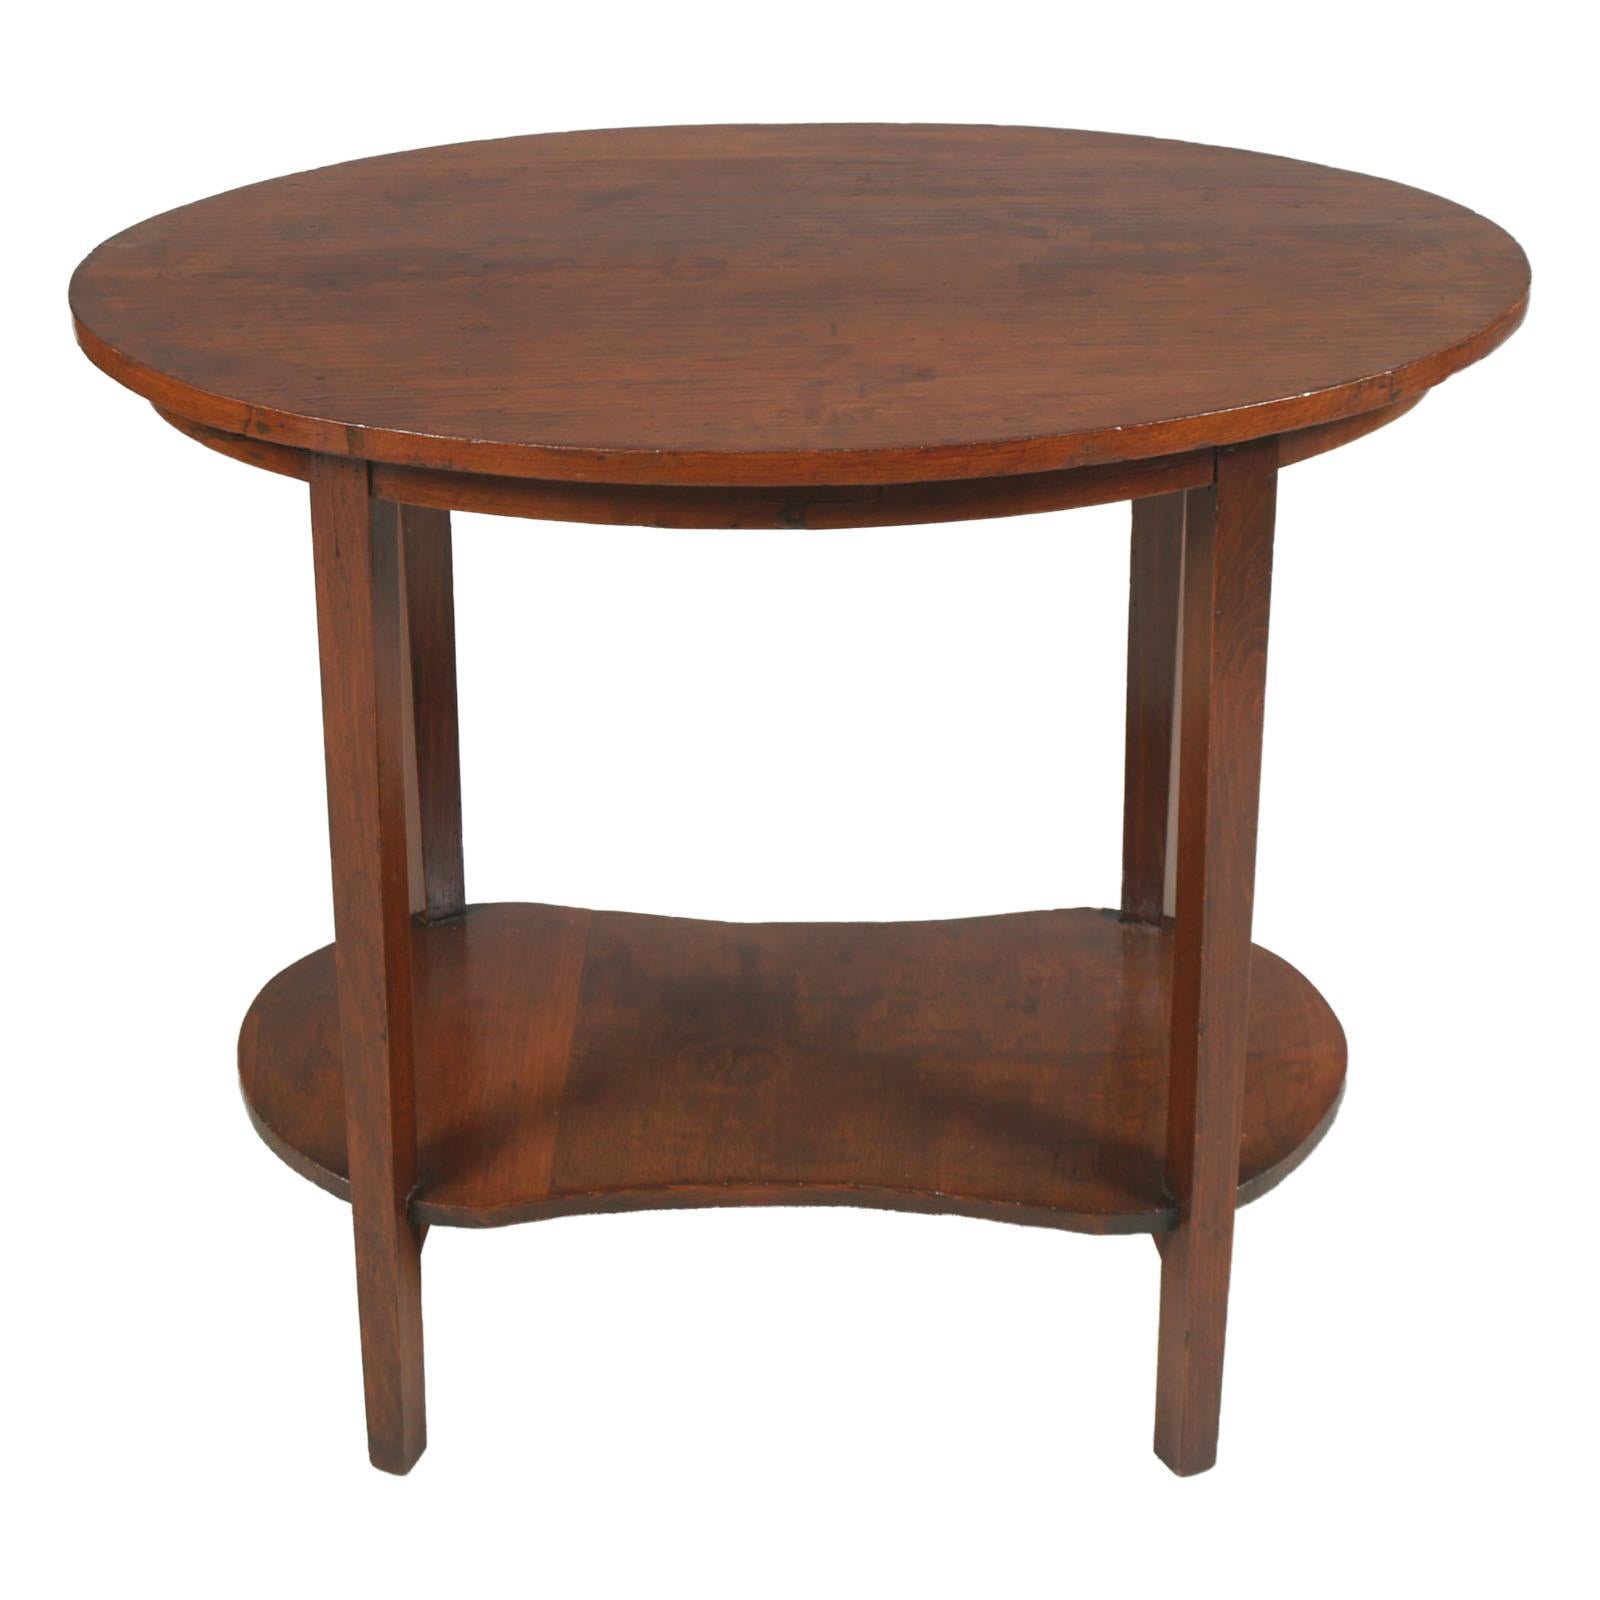 Italian Early 20th Century Small Side Table, Art Nouveau, Wienner Werkstatte manner For Sale